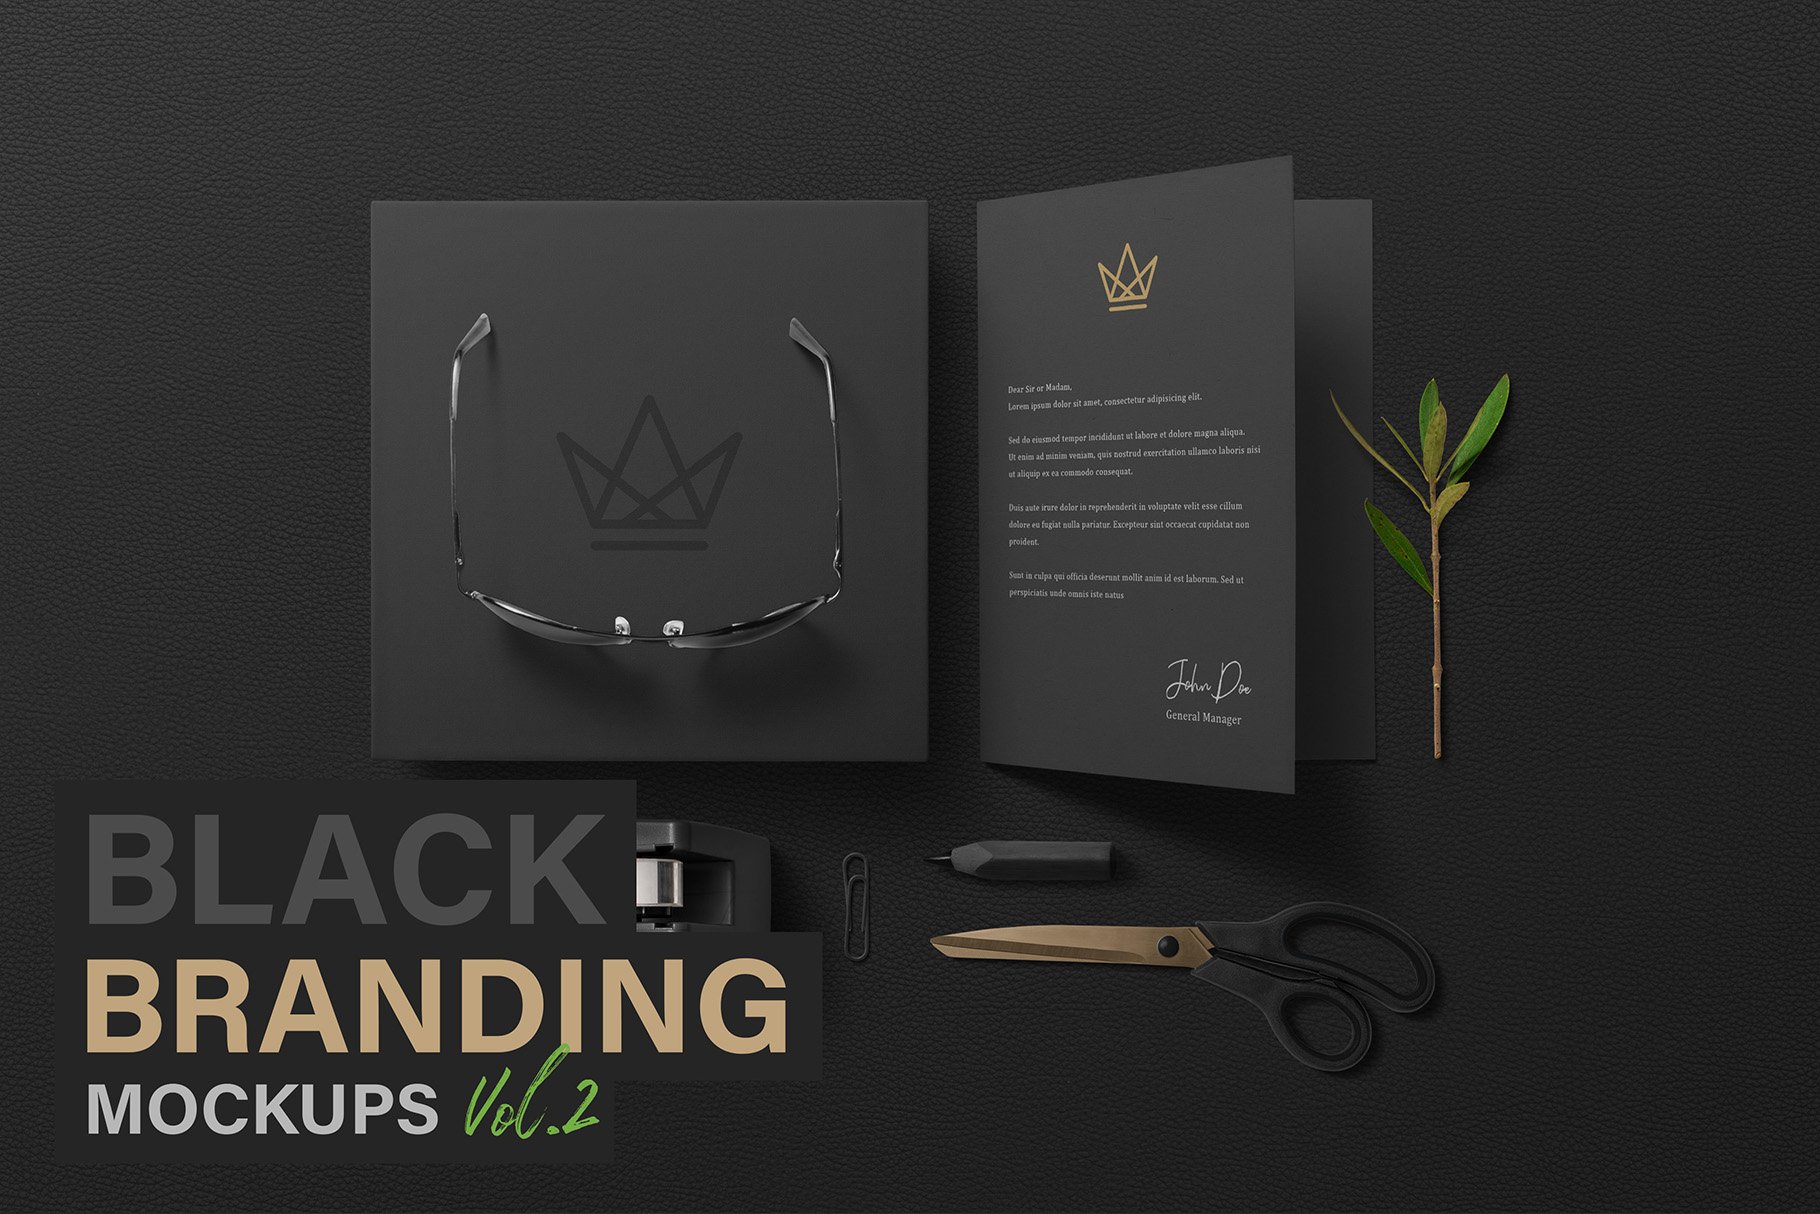 Black Branding Mockups Vol.2 cover image.